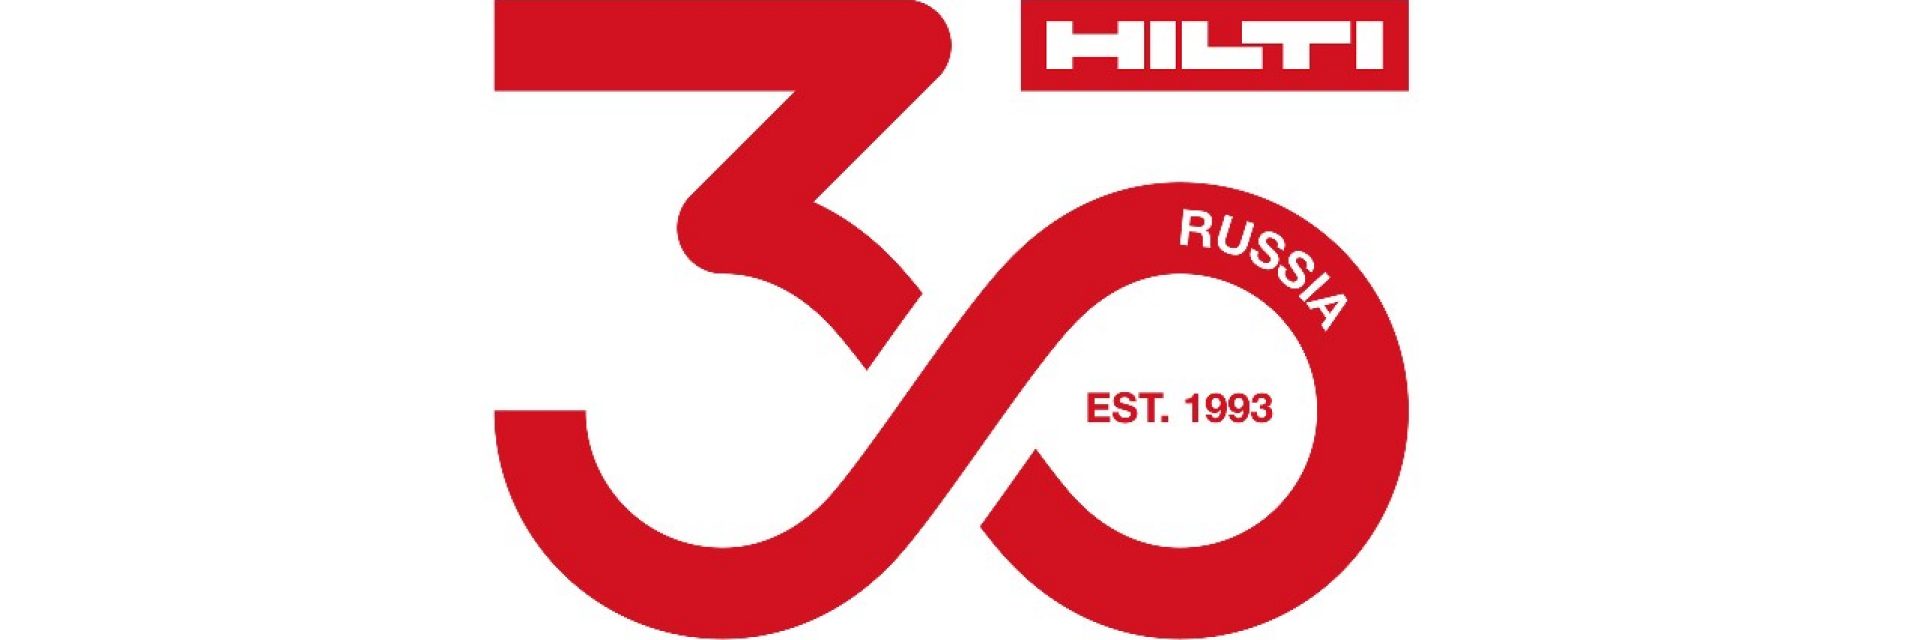 Hilti Россия 30 лет 